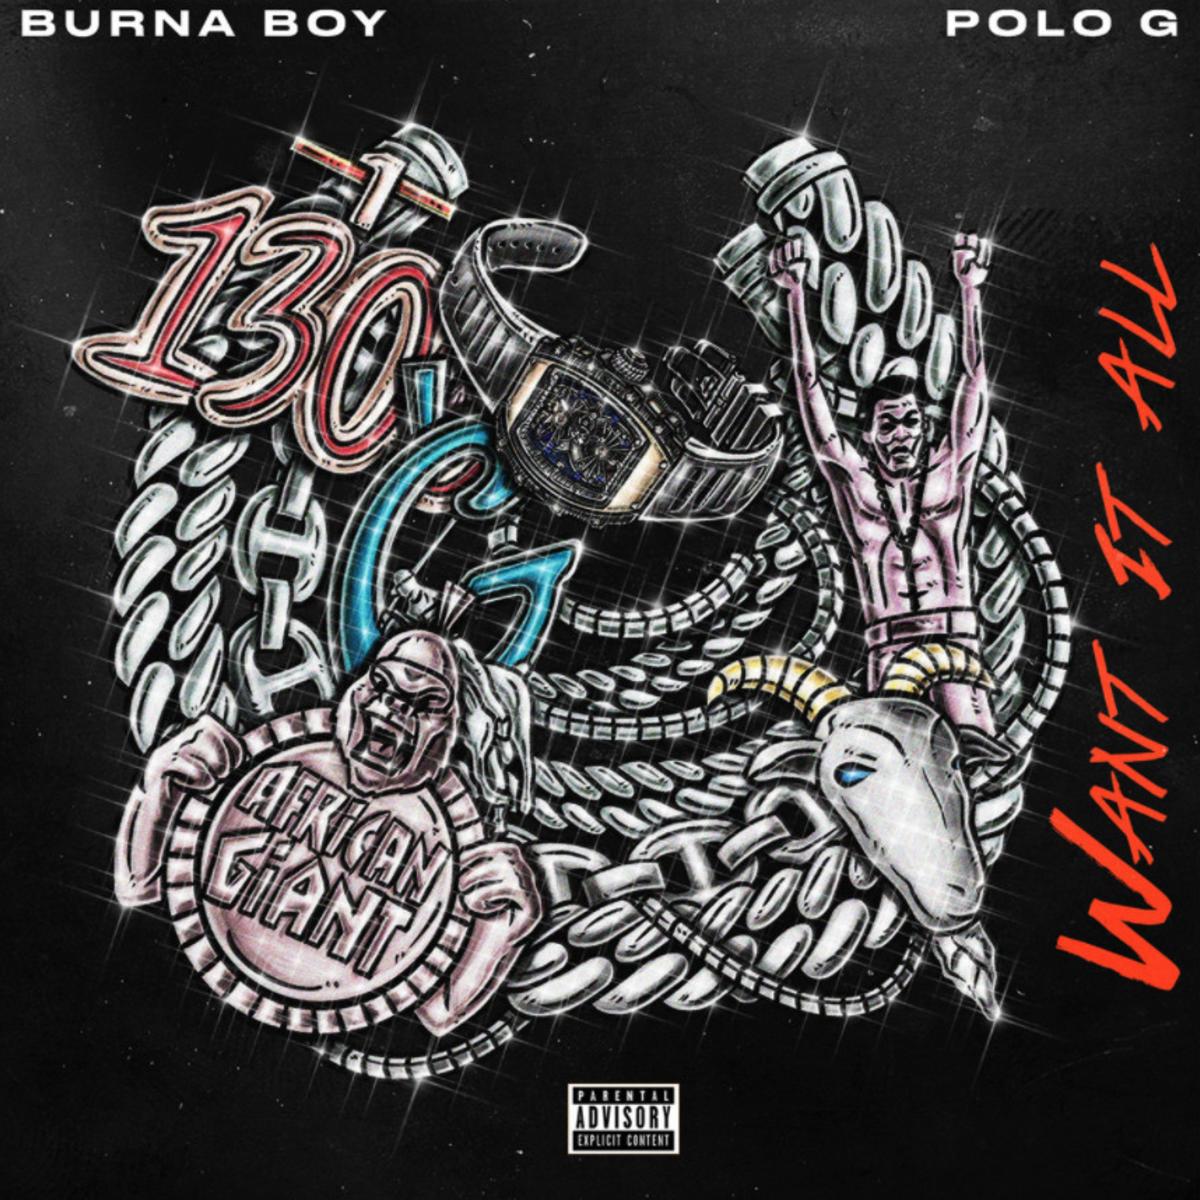 MP3: Burna Boy - Want It All Ft. Polo G